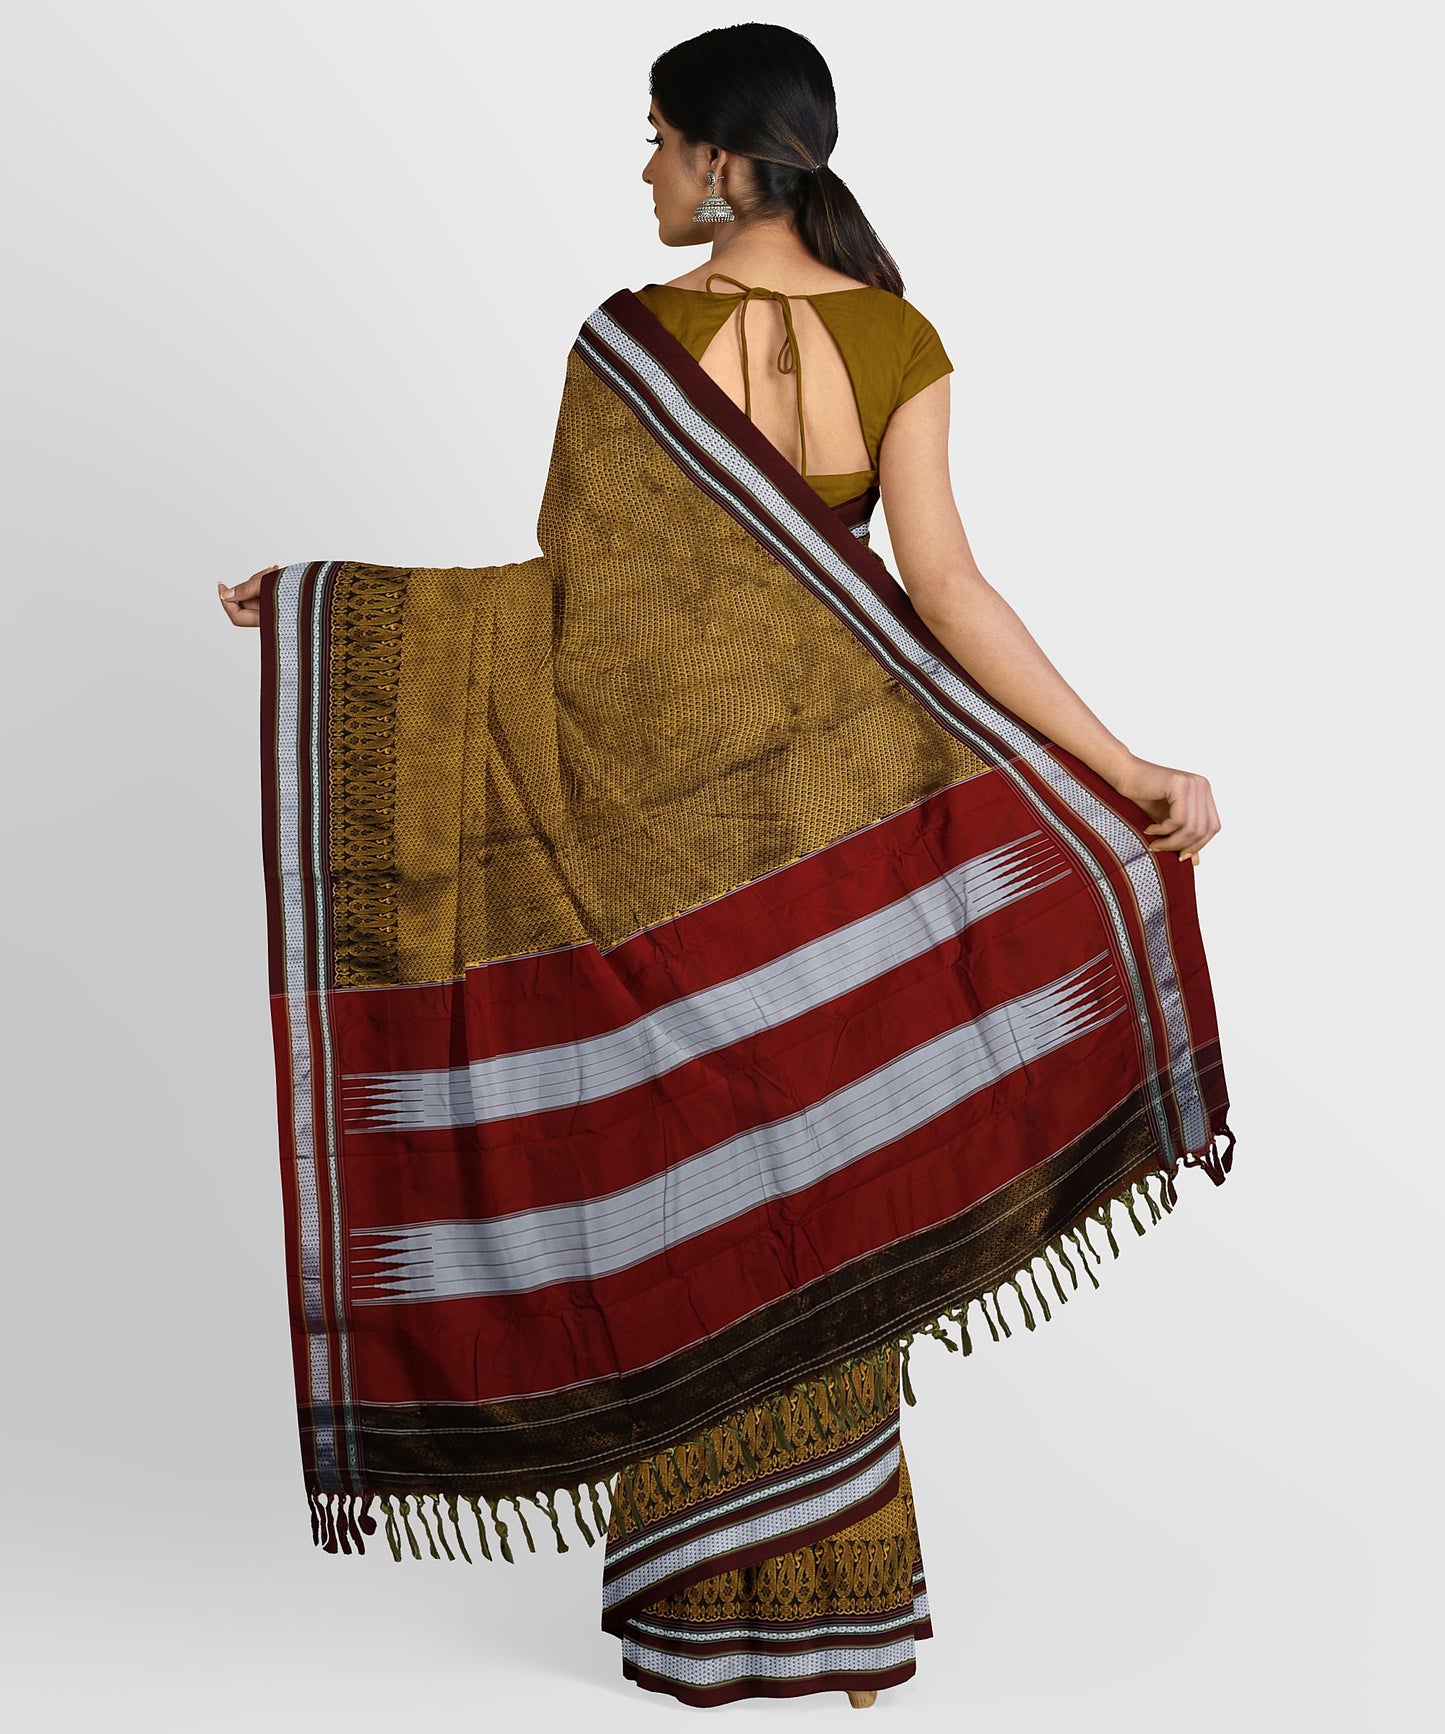 Traditional Khana Saree - Dull Gold Woven Body with Black Patti Design and Maroon Border freeshipping - Shreni Samudaya